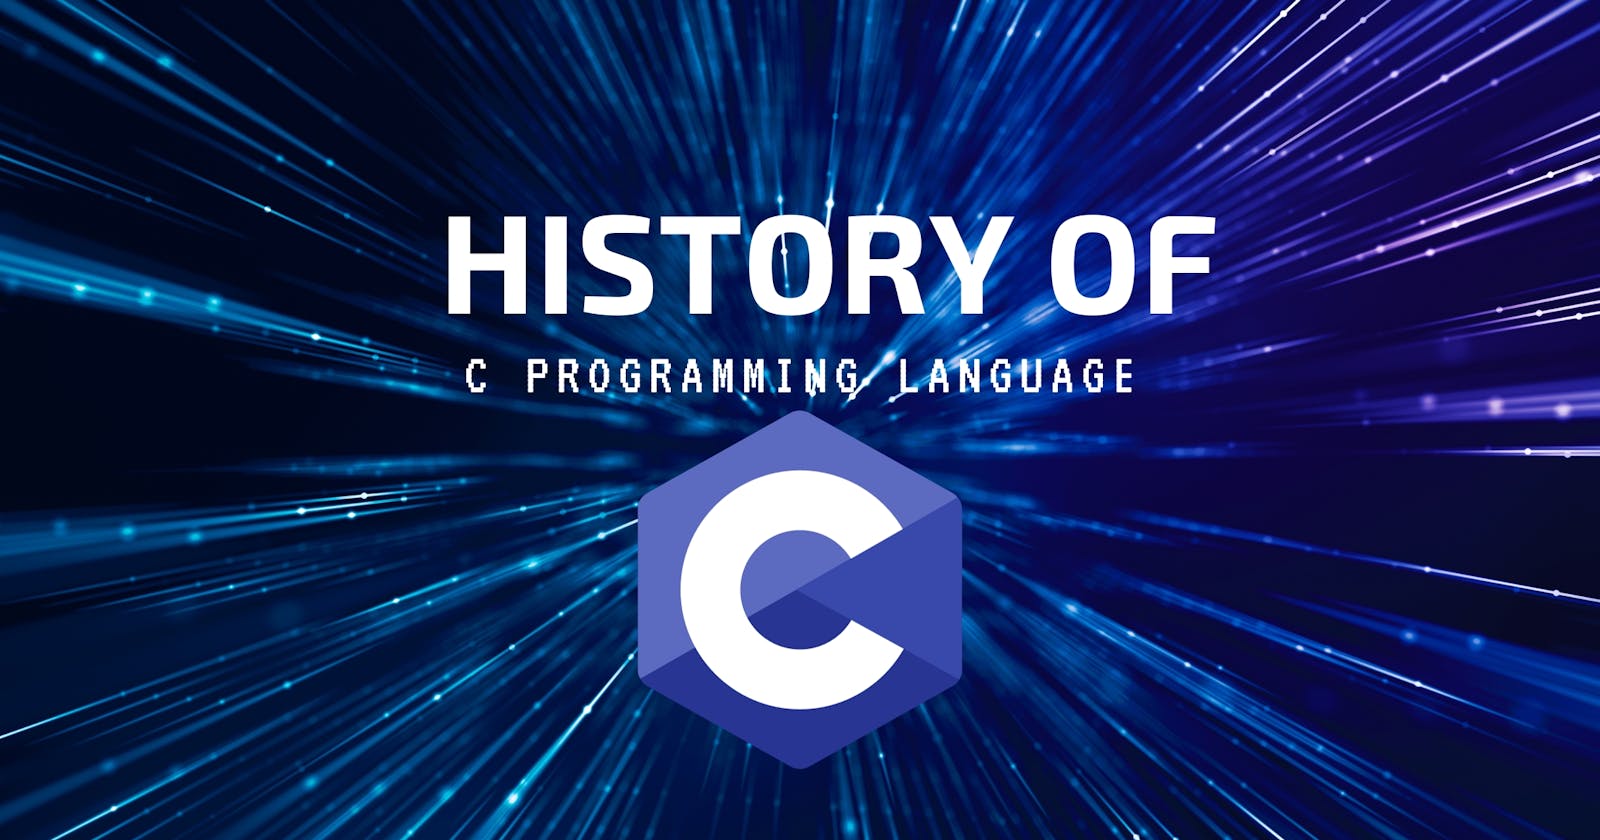 A brief History of C Programming Language